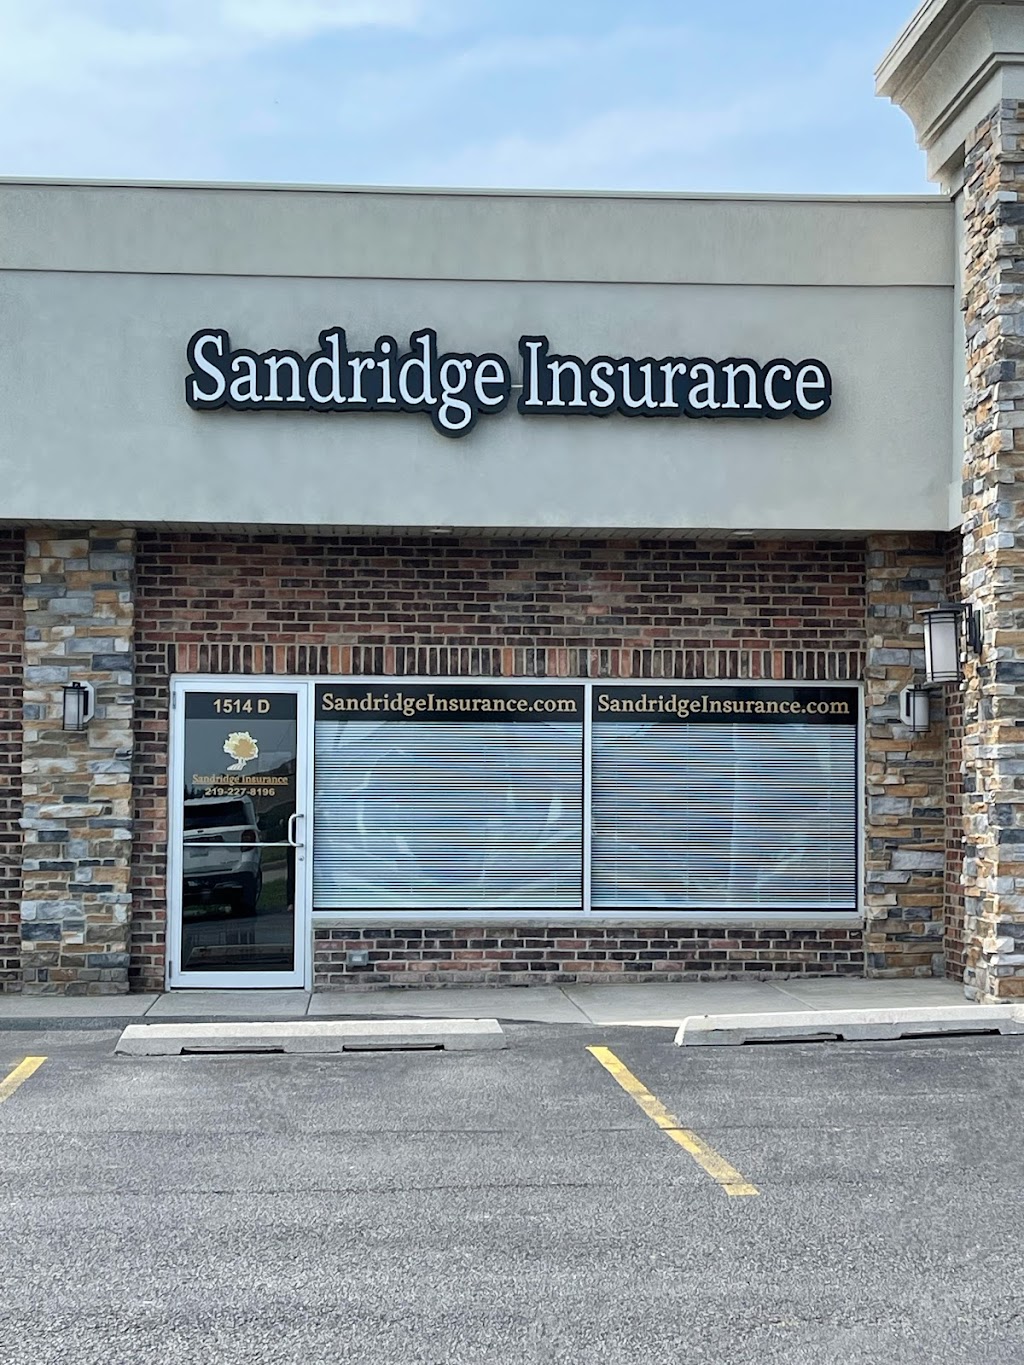 Sandridge Insurance Group | 1514 Joliet St Unit D, Dyer, IN 46311 | Phone: (219) 227-8196